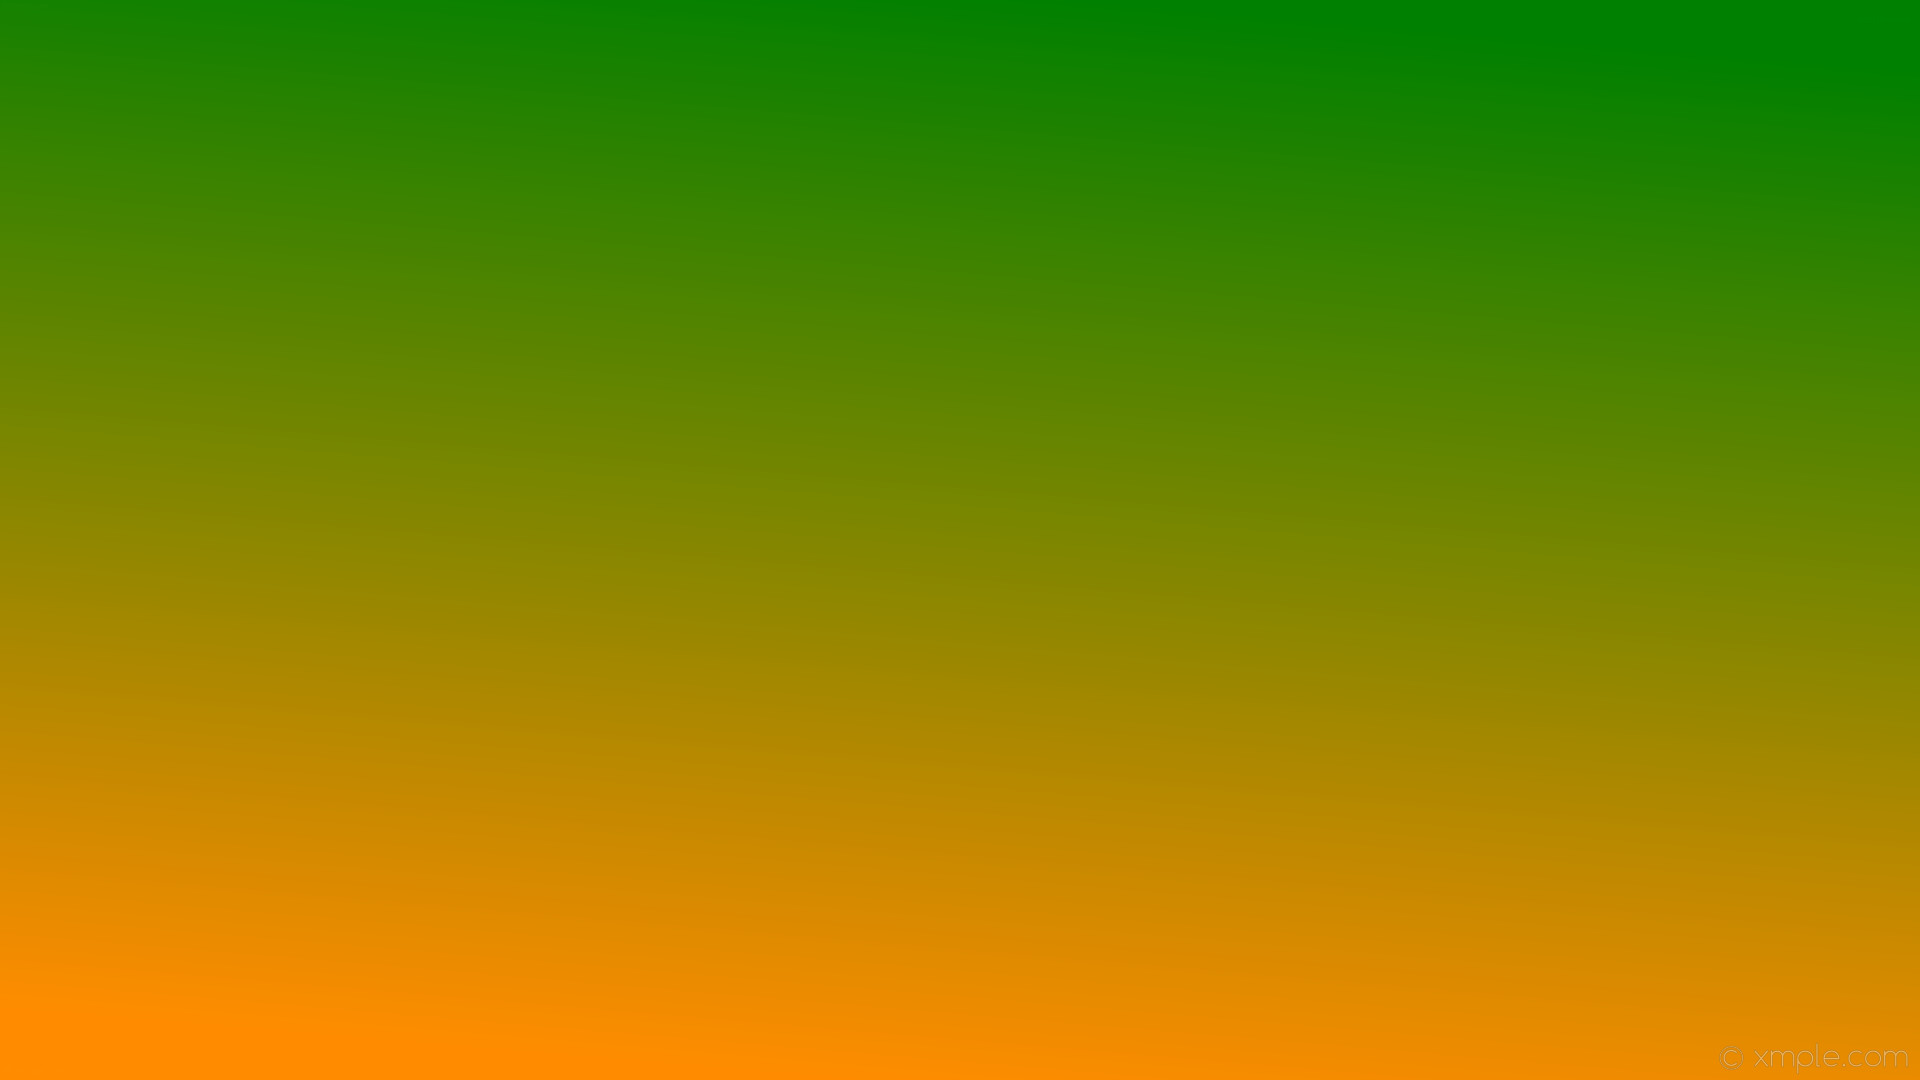 1920x1080 wallpaper gradient orange green linear dark orange #008000 #ff8c00 75Â°